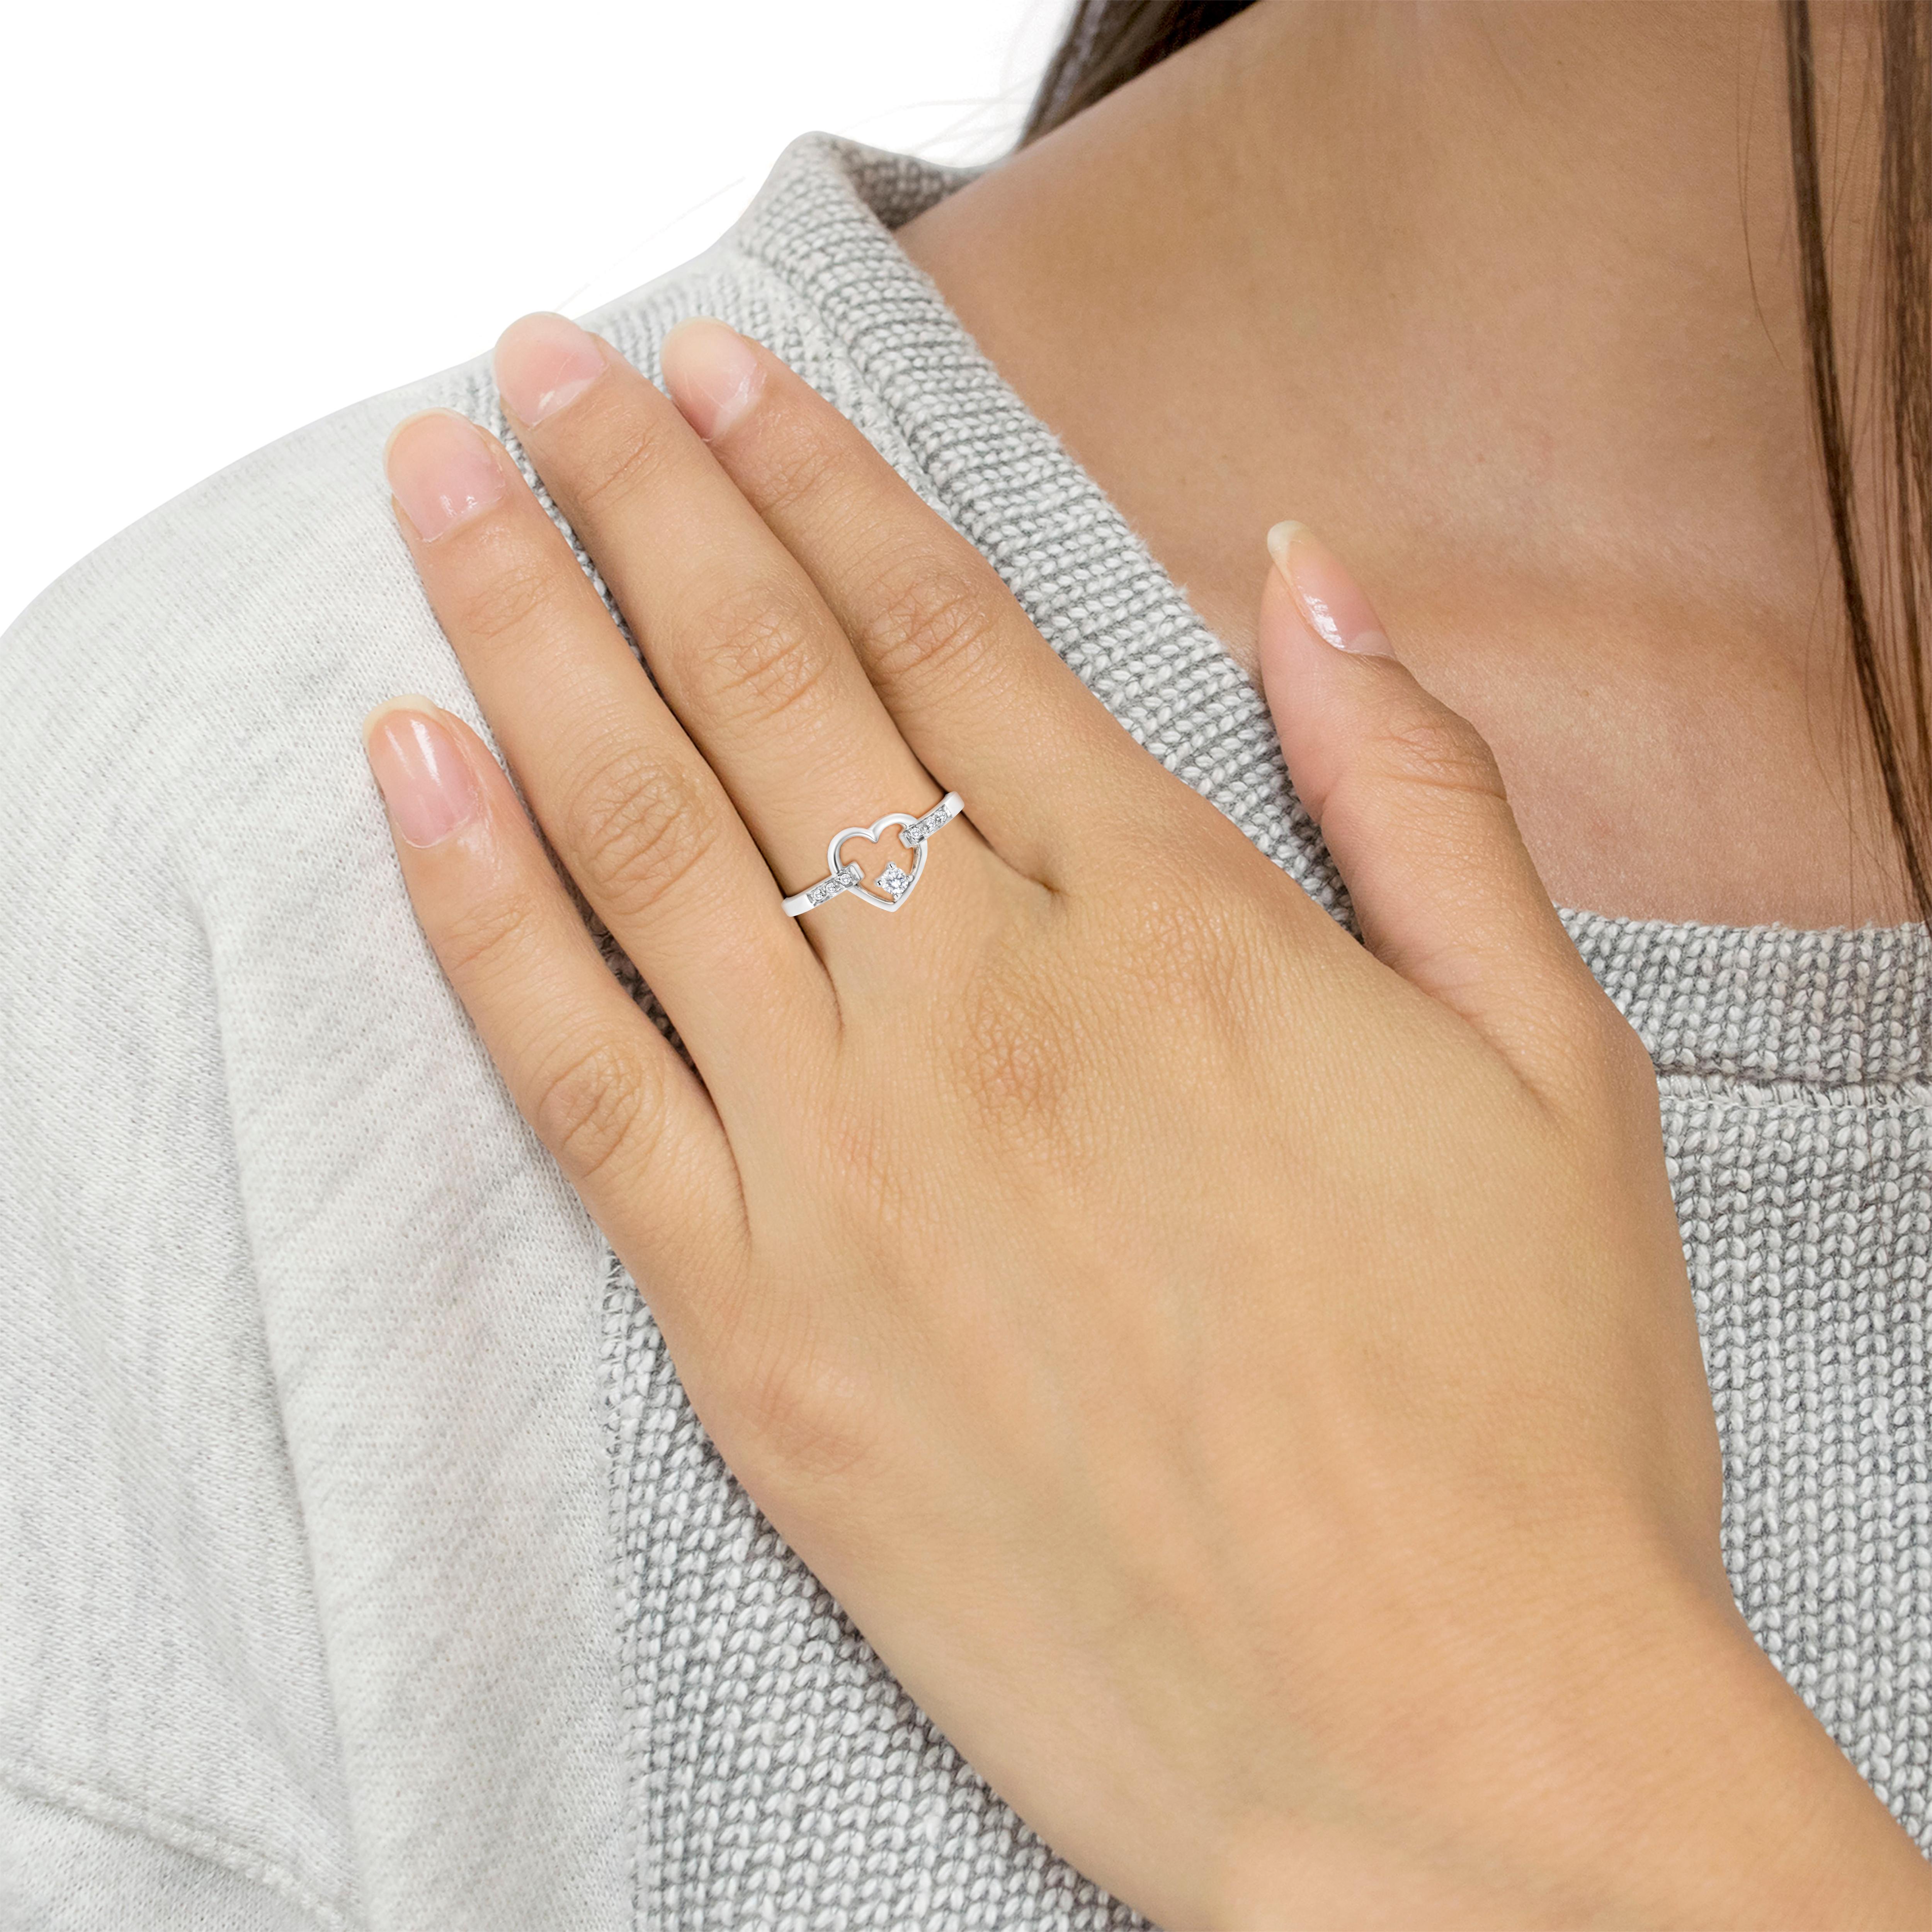 8 carat heart shaped diamond ring